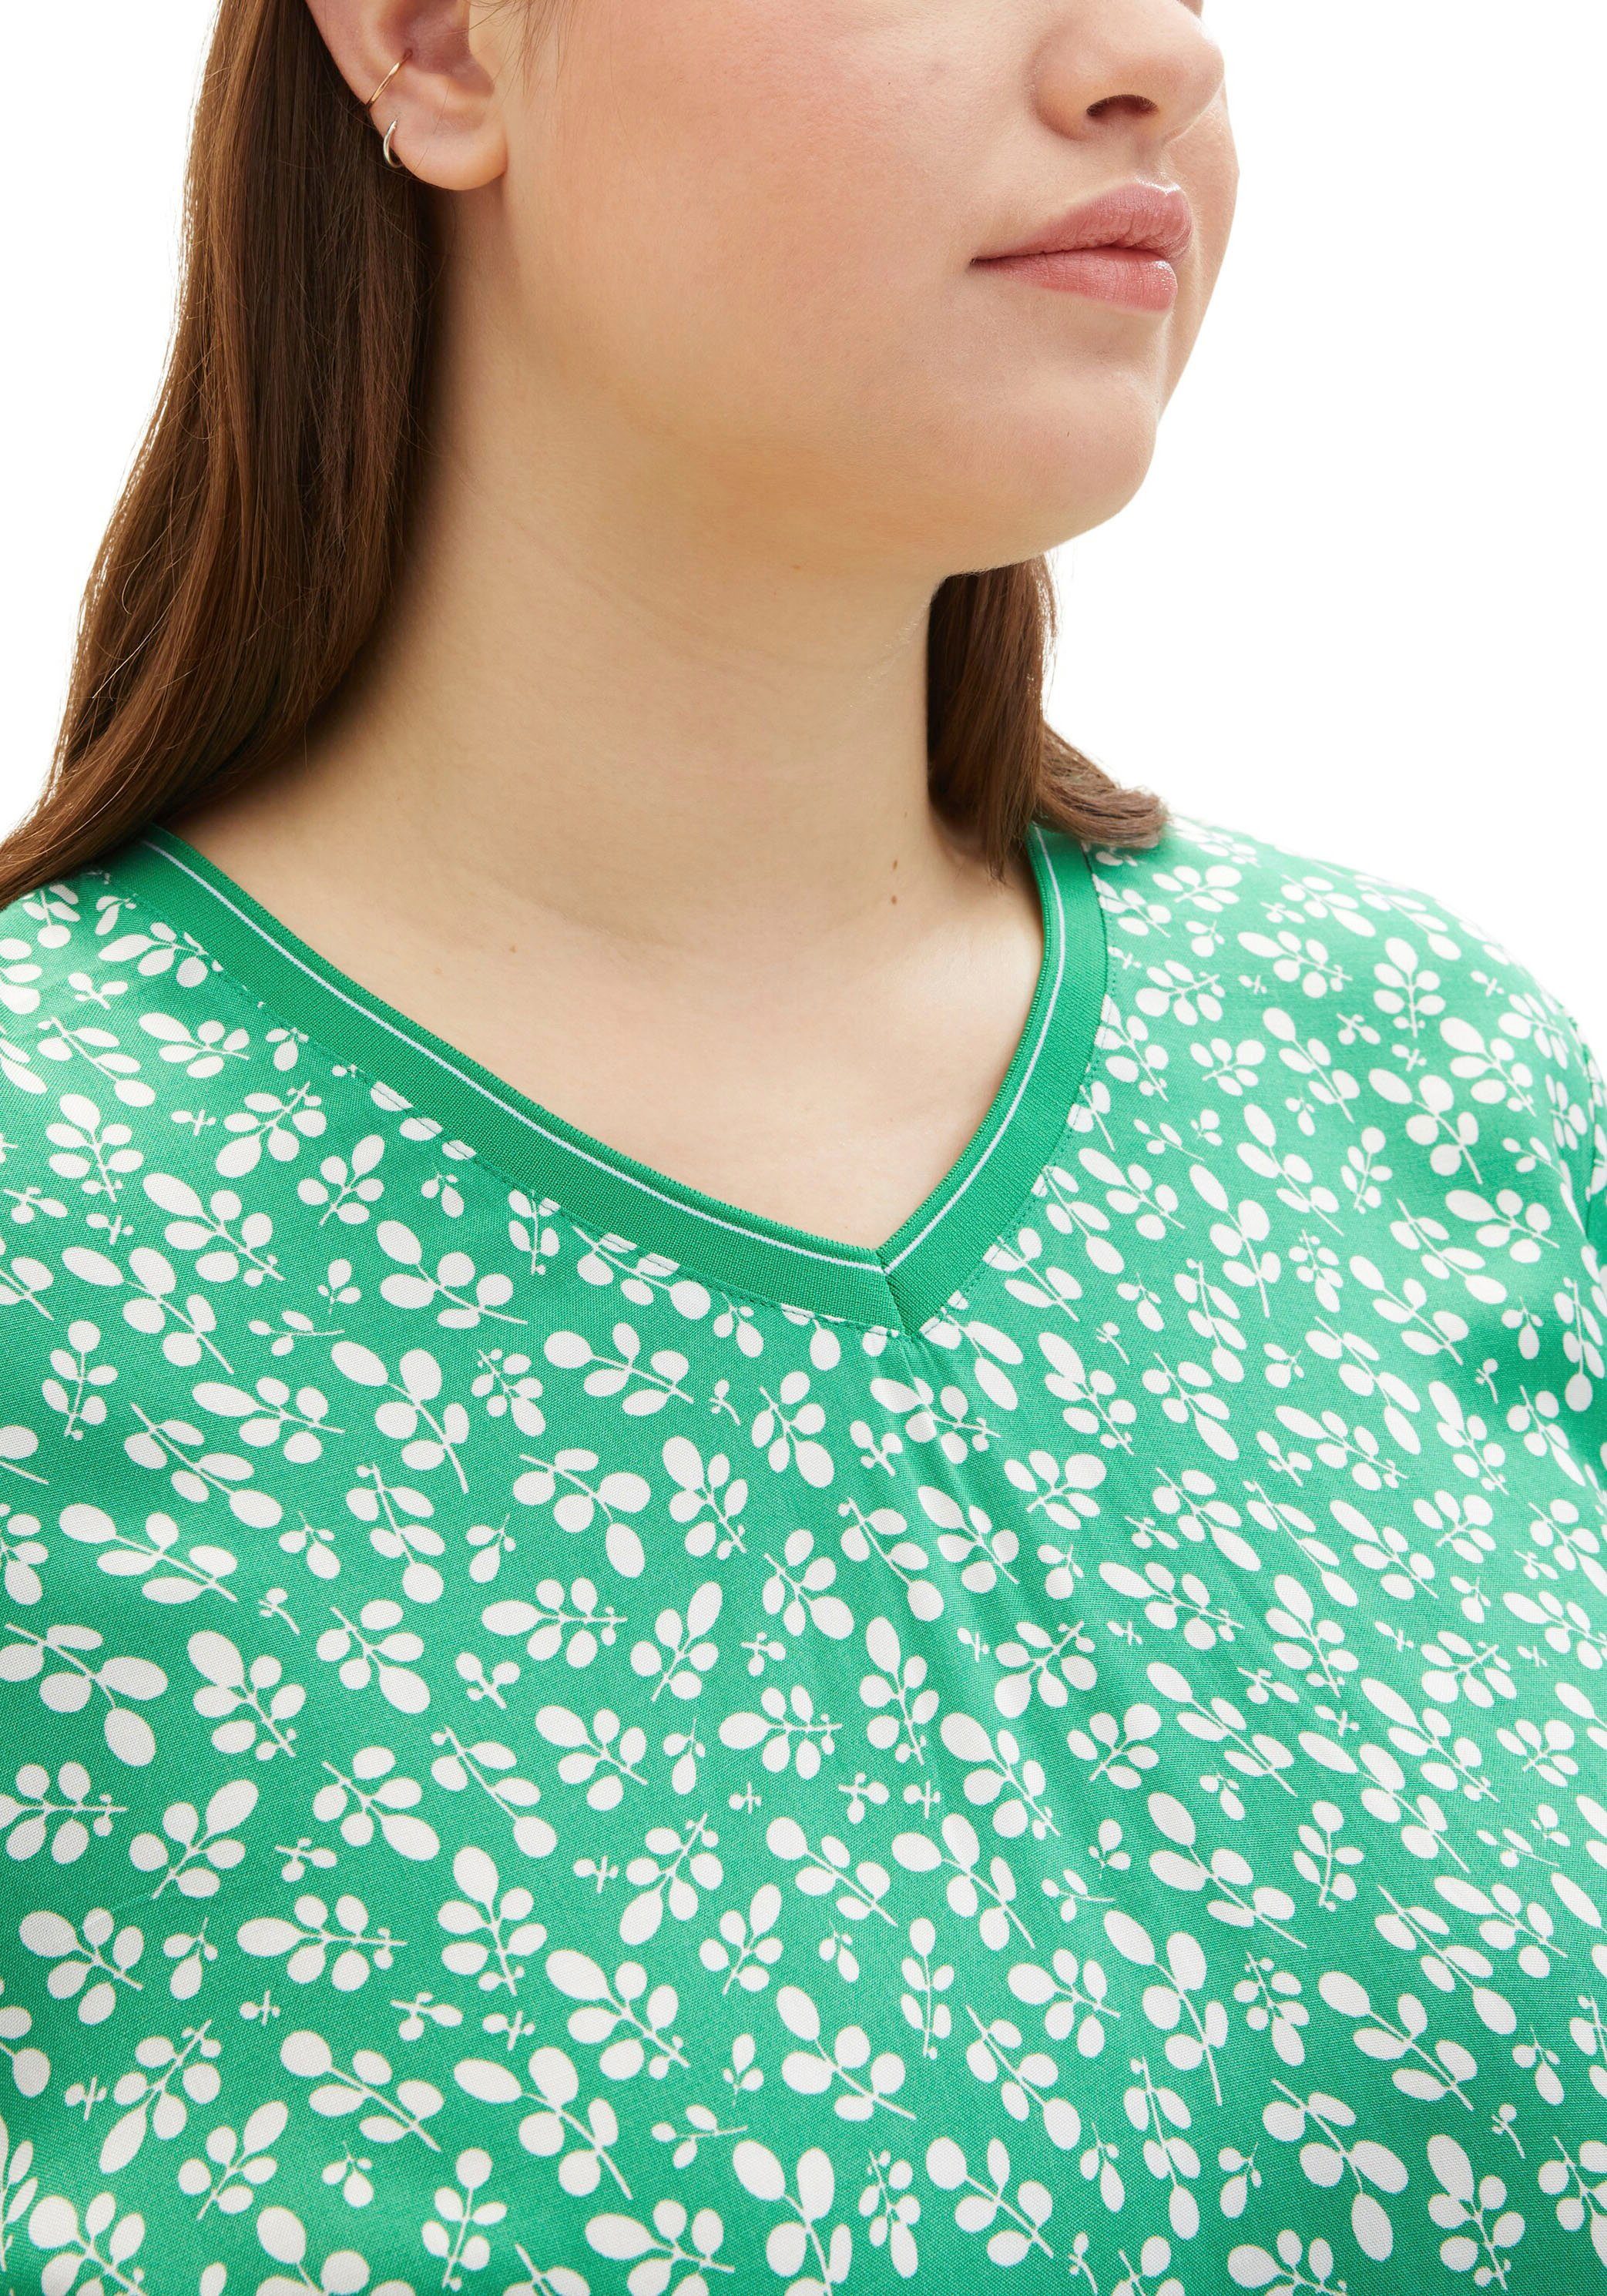 mit TAILOR PLUS Muster weiß grün geblümt TOM floralem 3/4-Arm-Shirt